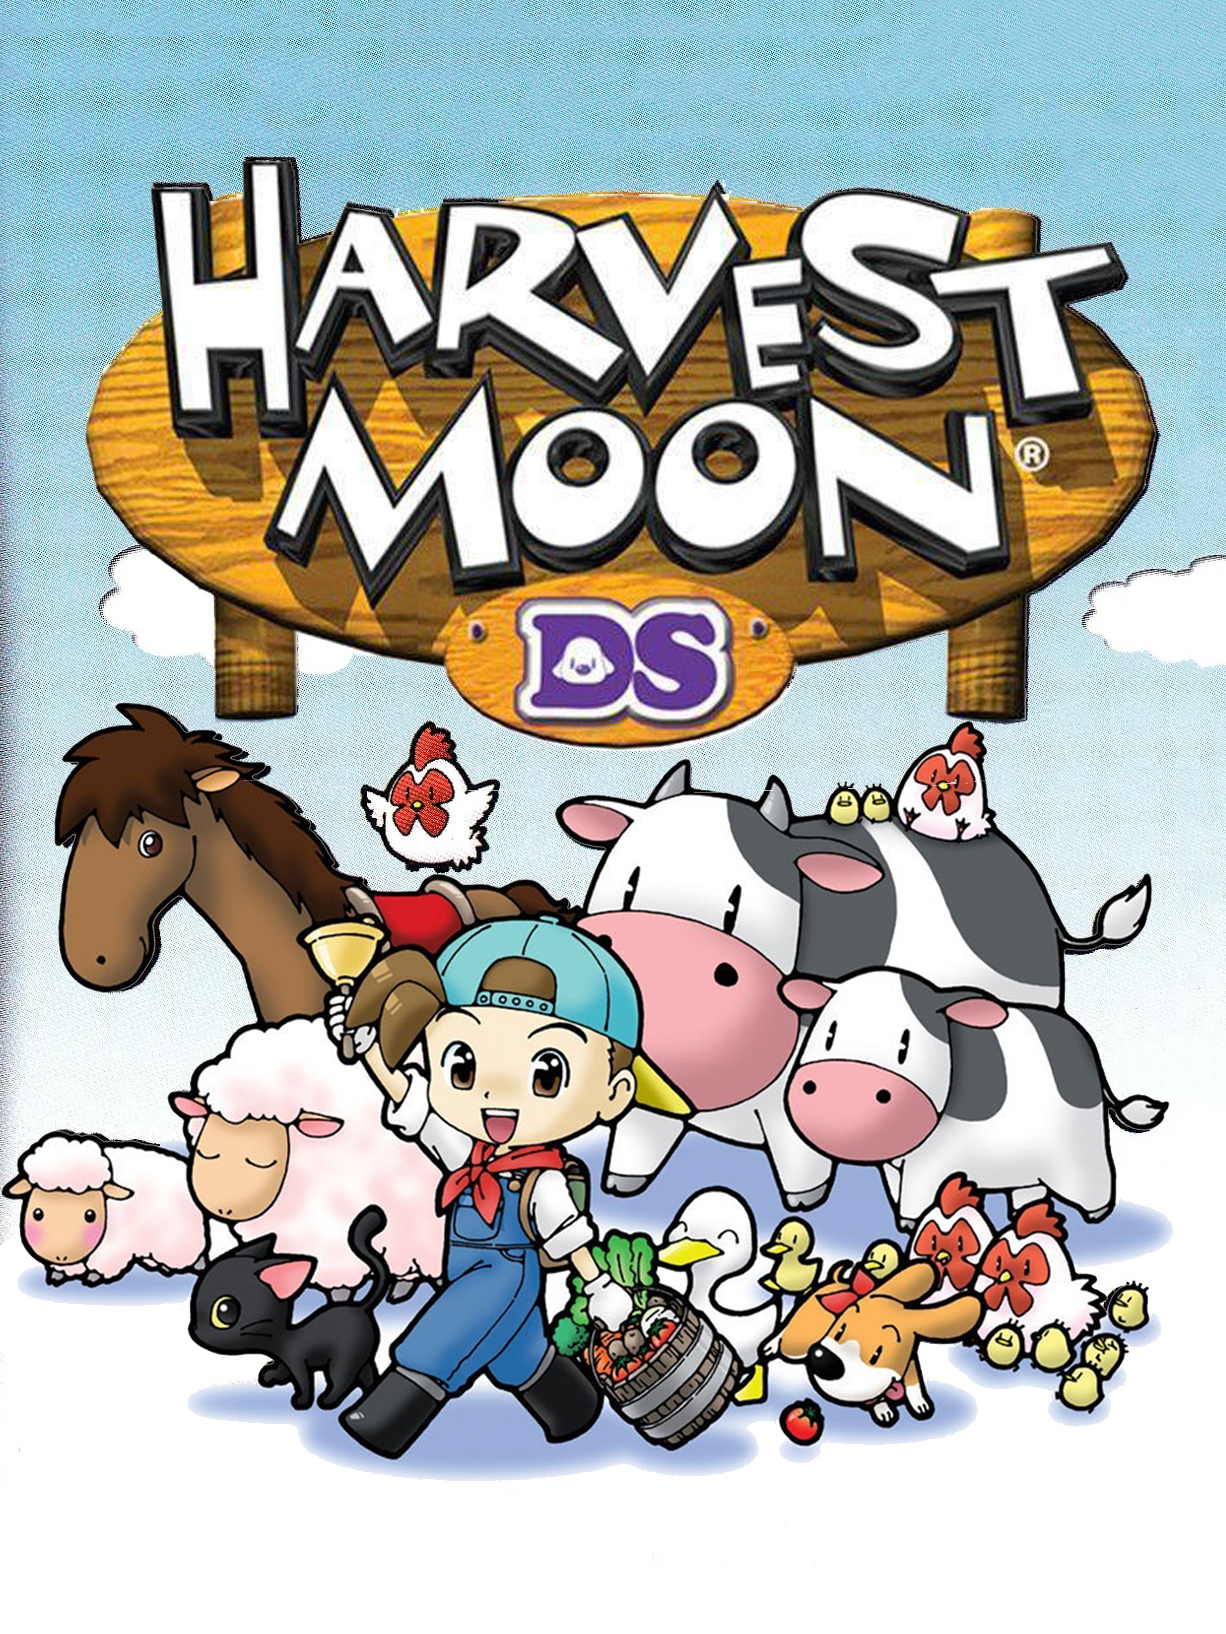 Harvest Moon DS - Wikipedia